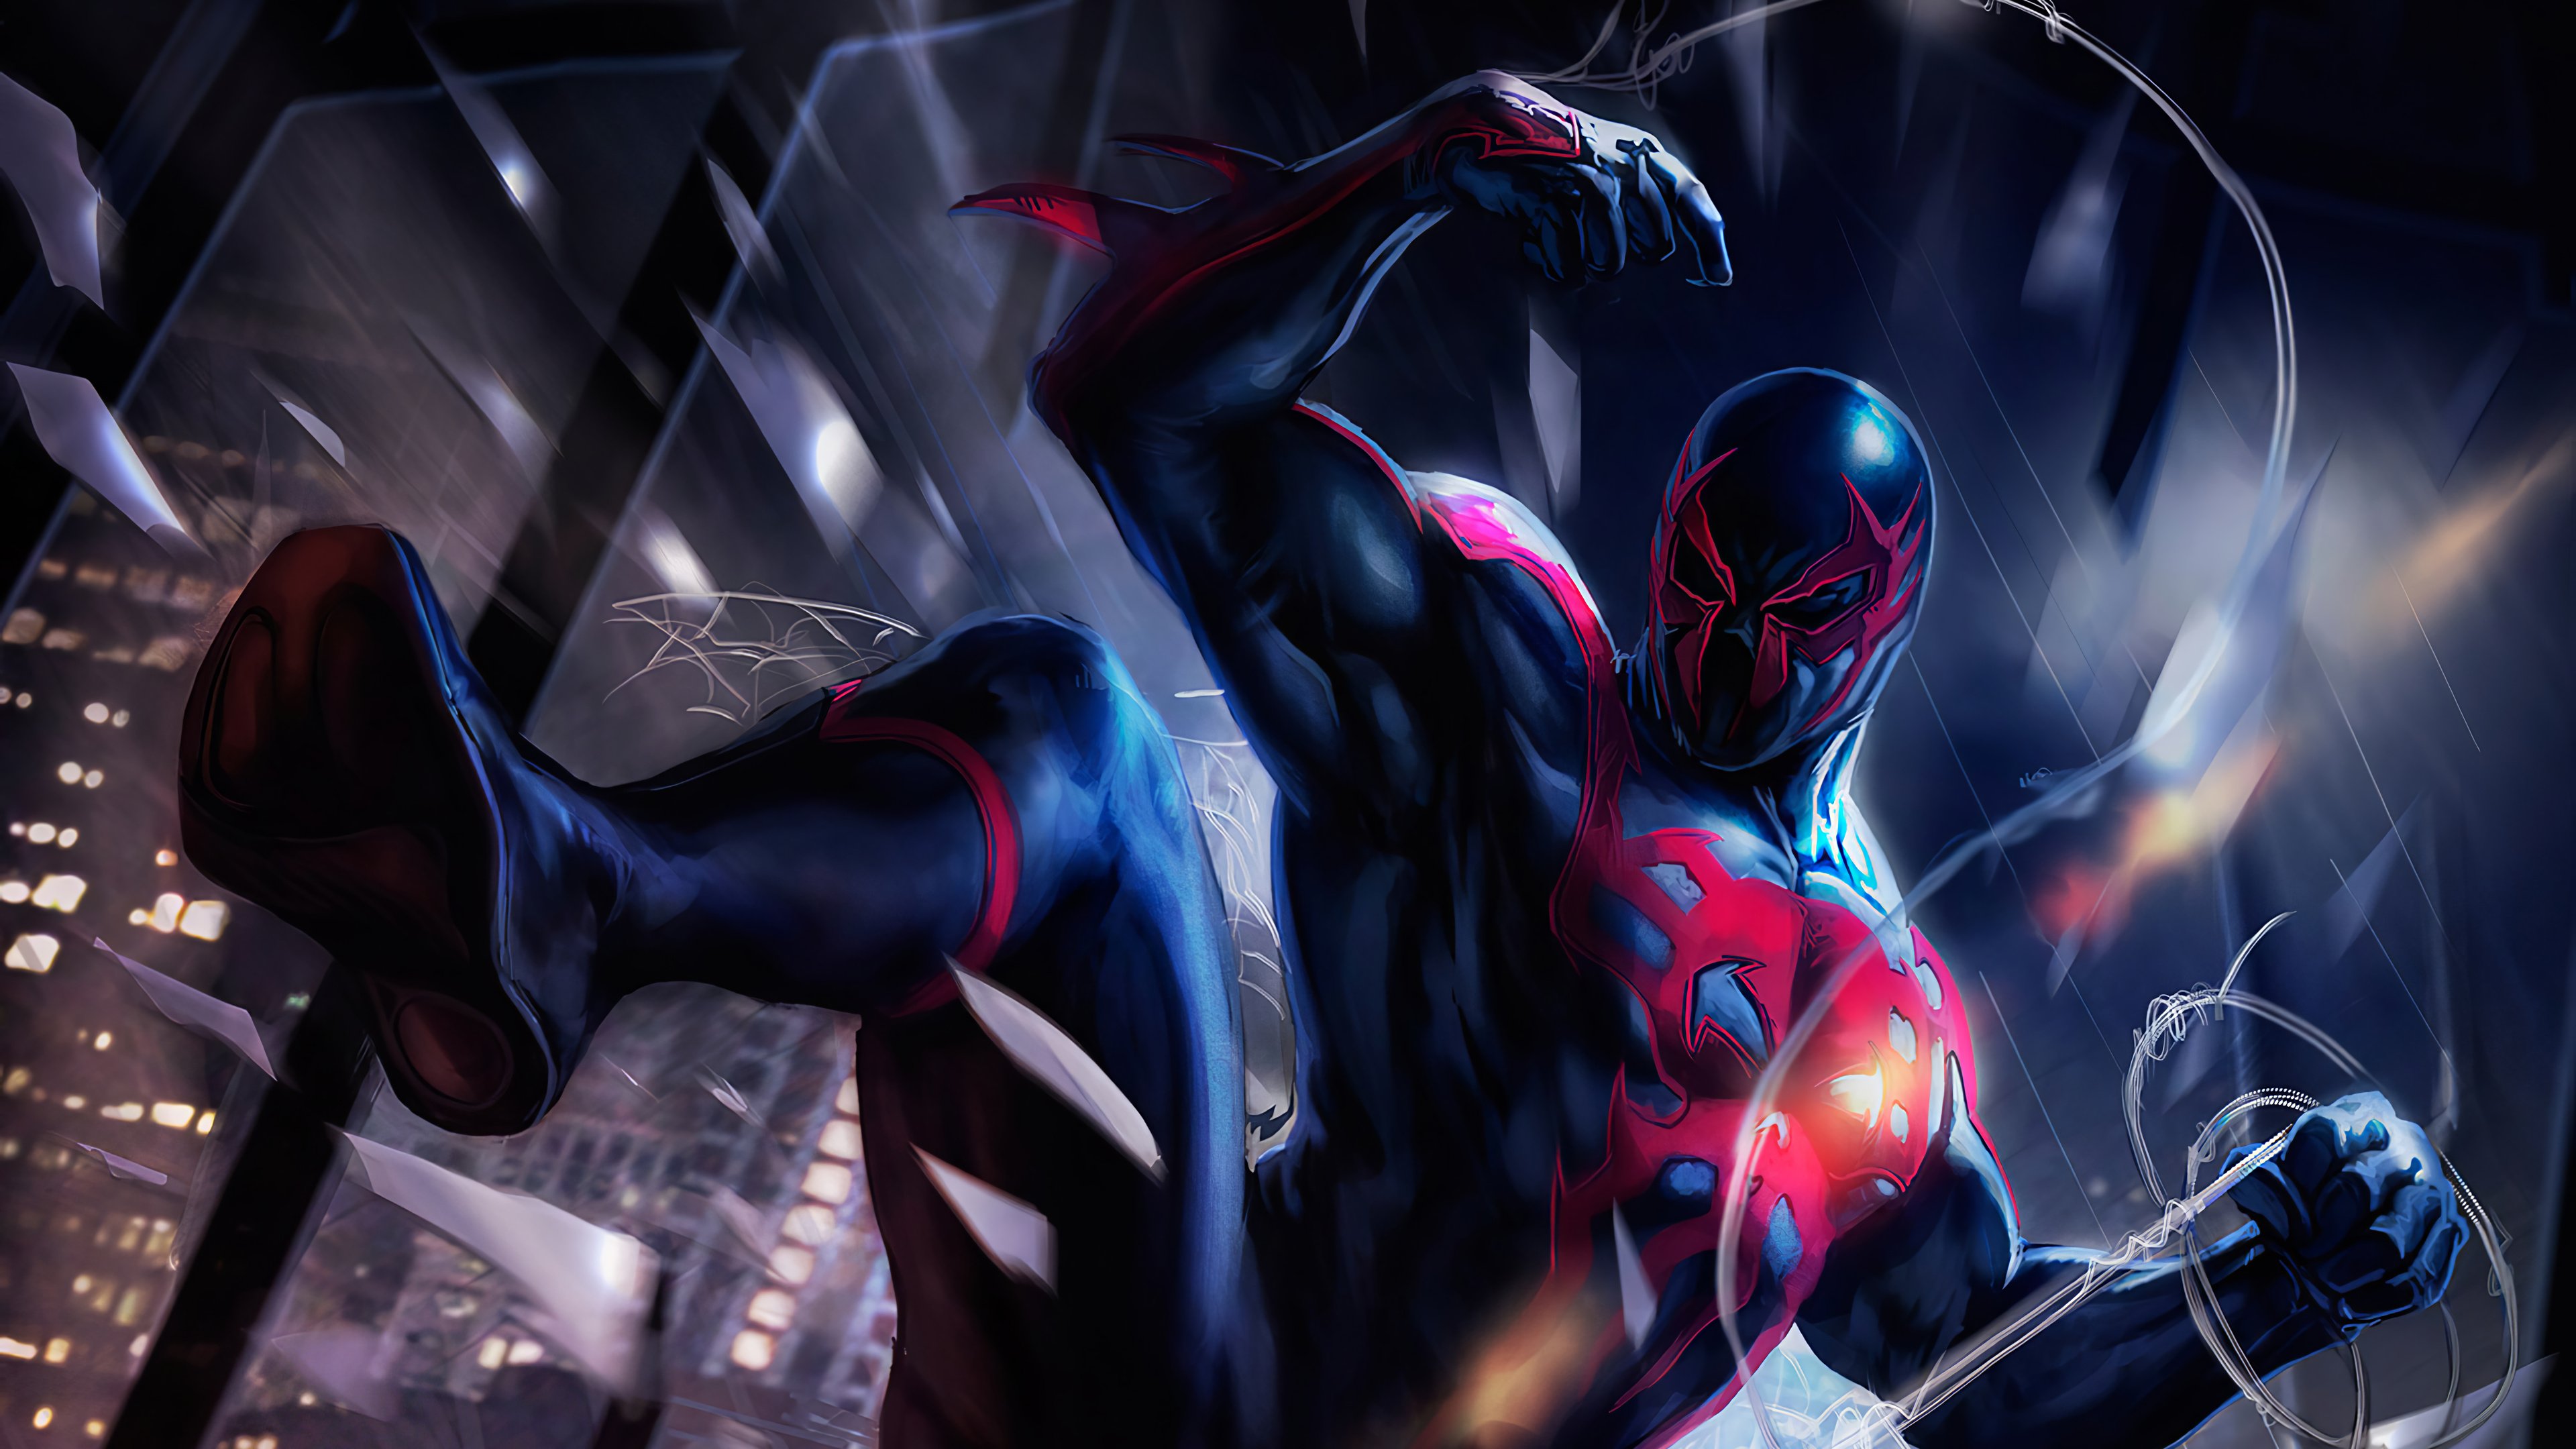 Wallpaper Superhero Spiderman 2099